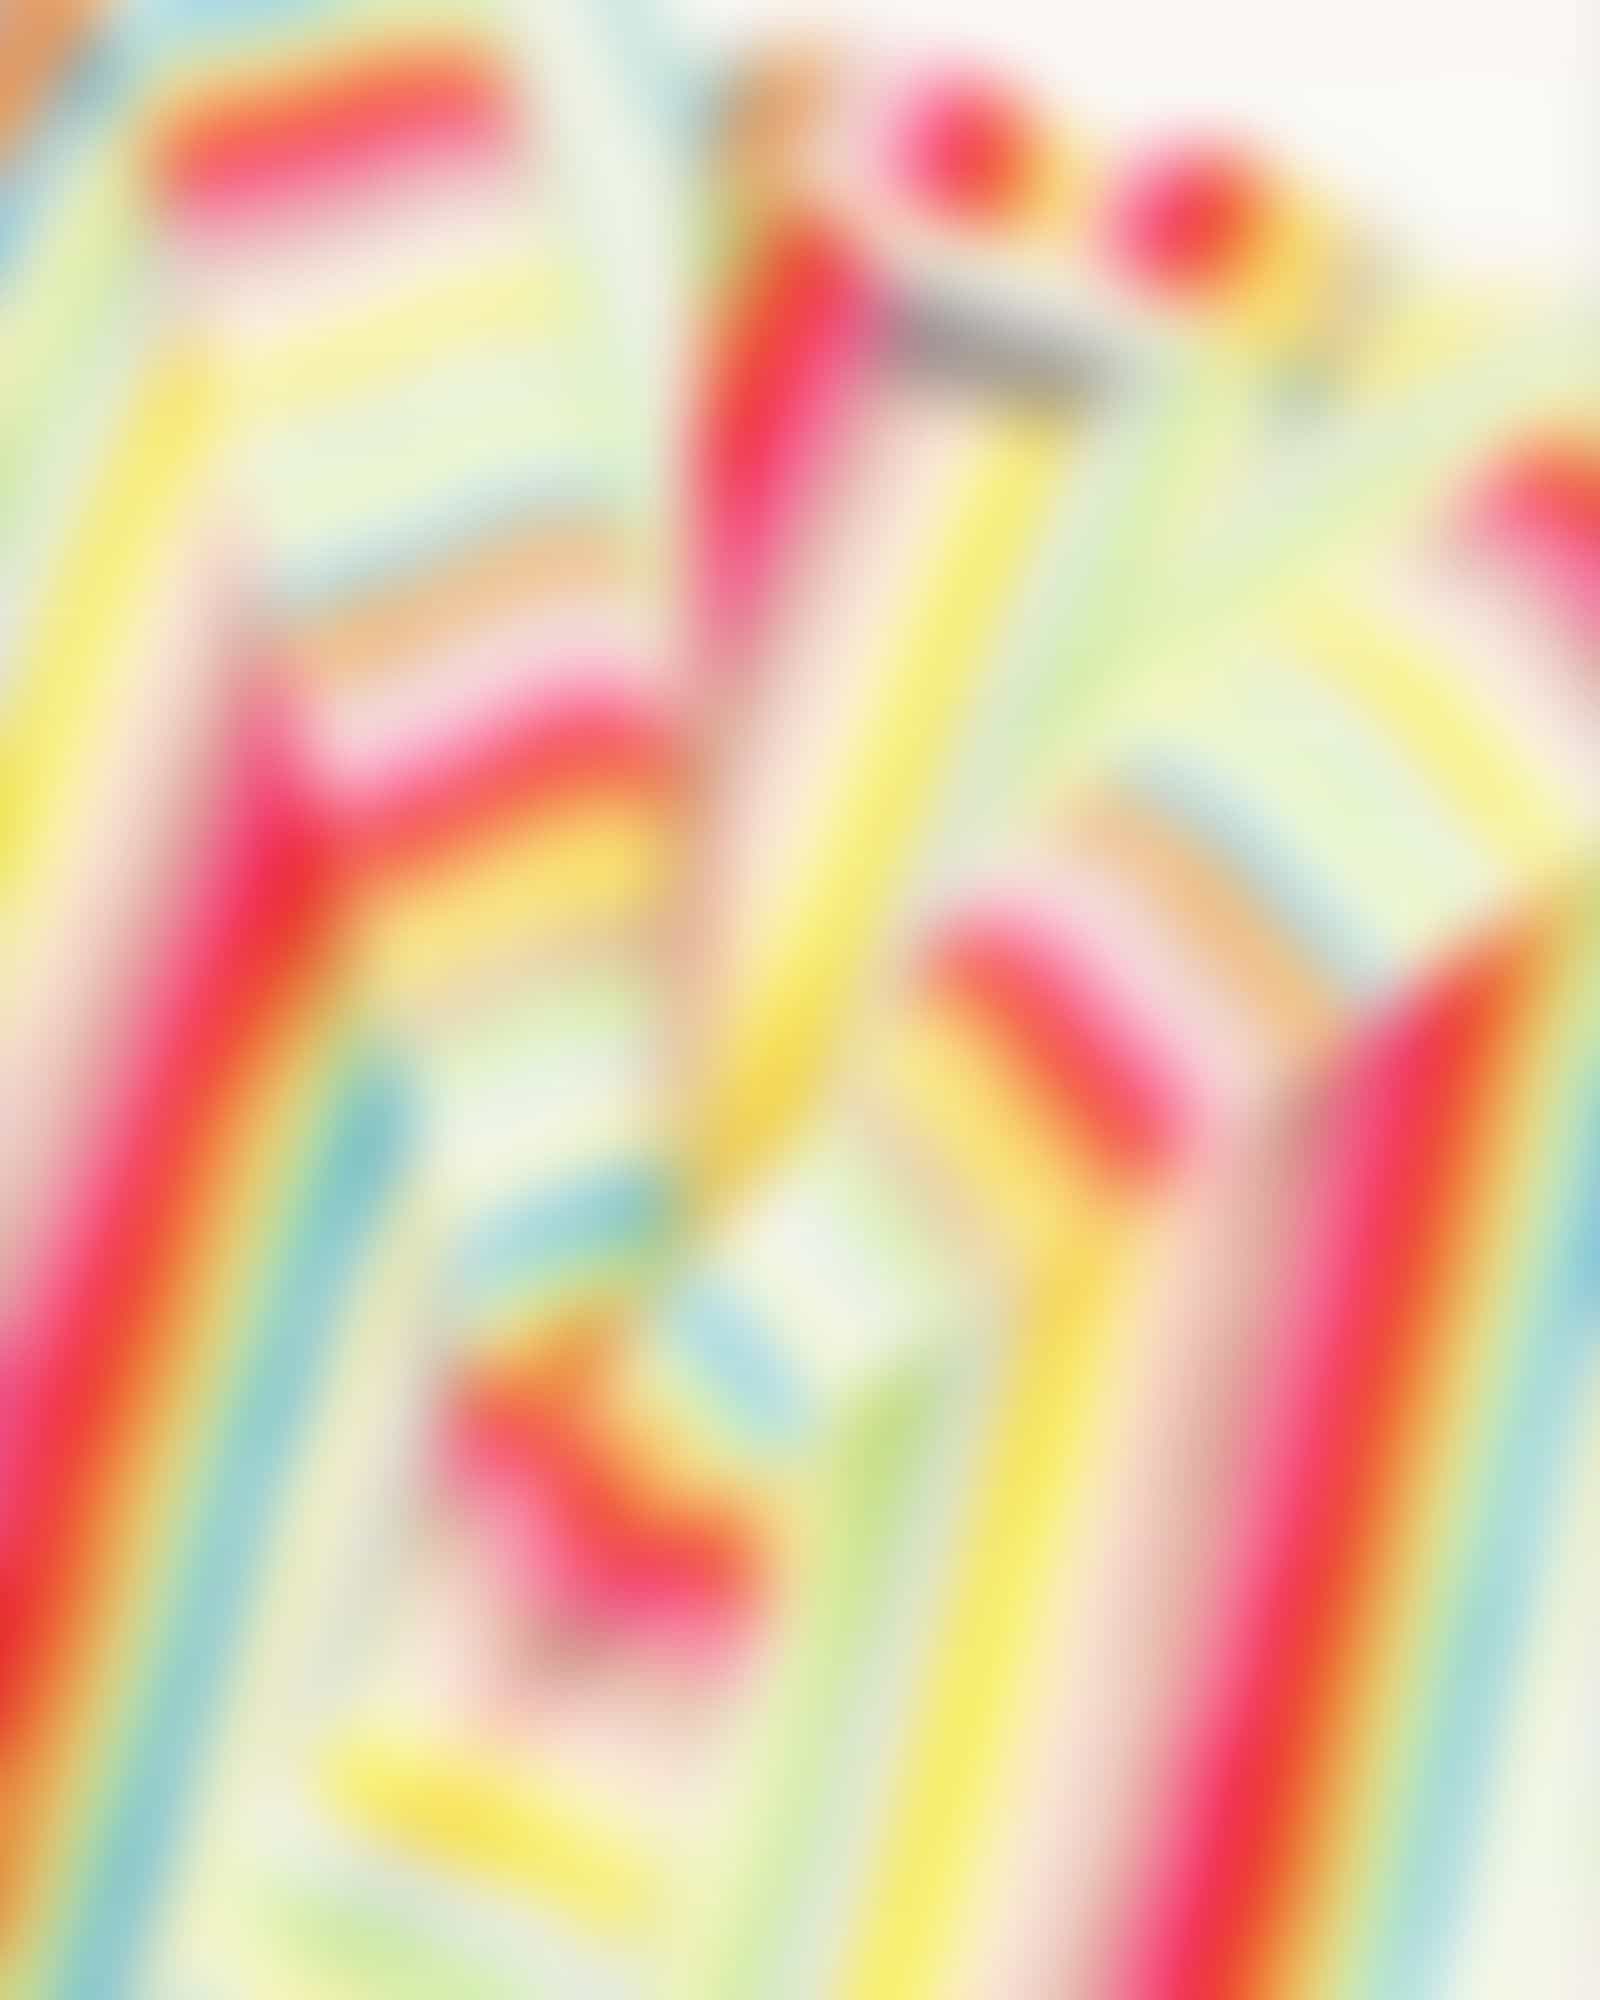 Cawö - Damen Bademantel Life Style - Kurzmantel mit Kapuze 7082 - Farbe: multicolor - 25 - S